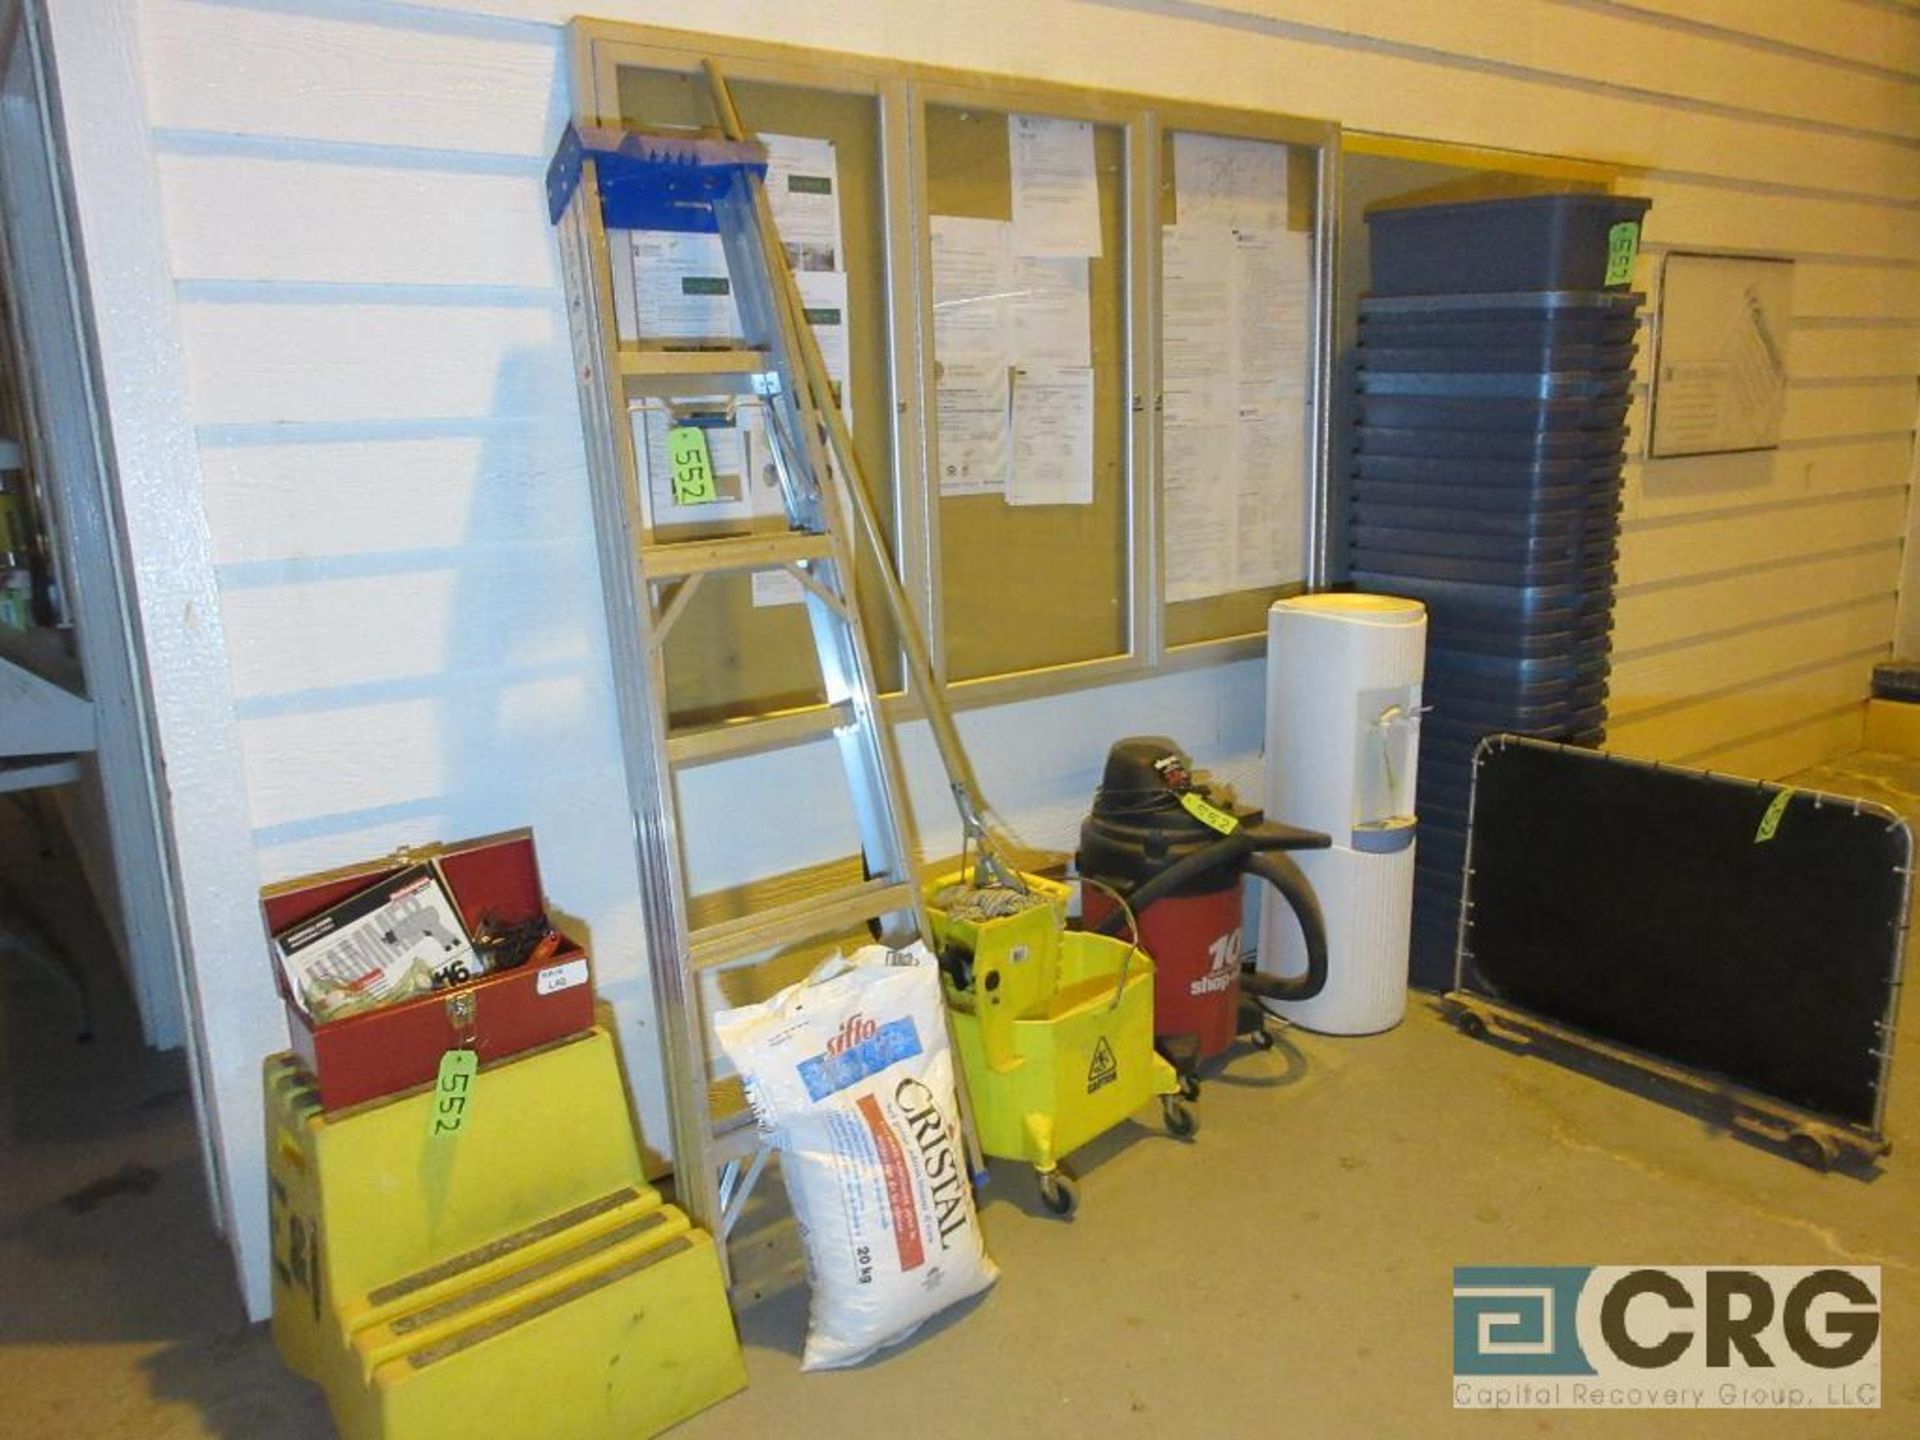 Mop Bucket/Shop Vac/Ladder/Step Stool/Dividing Curtain